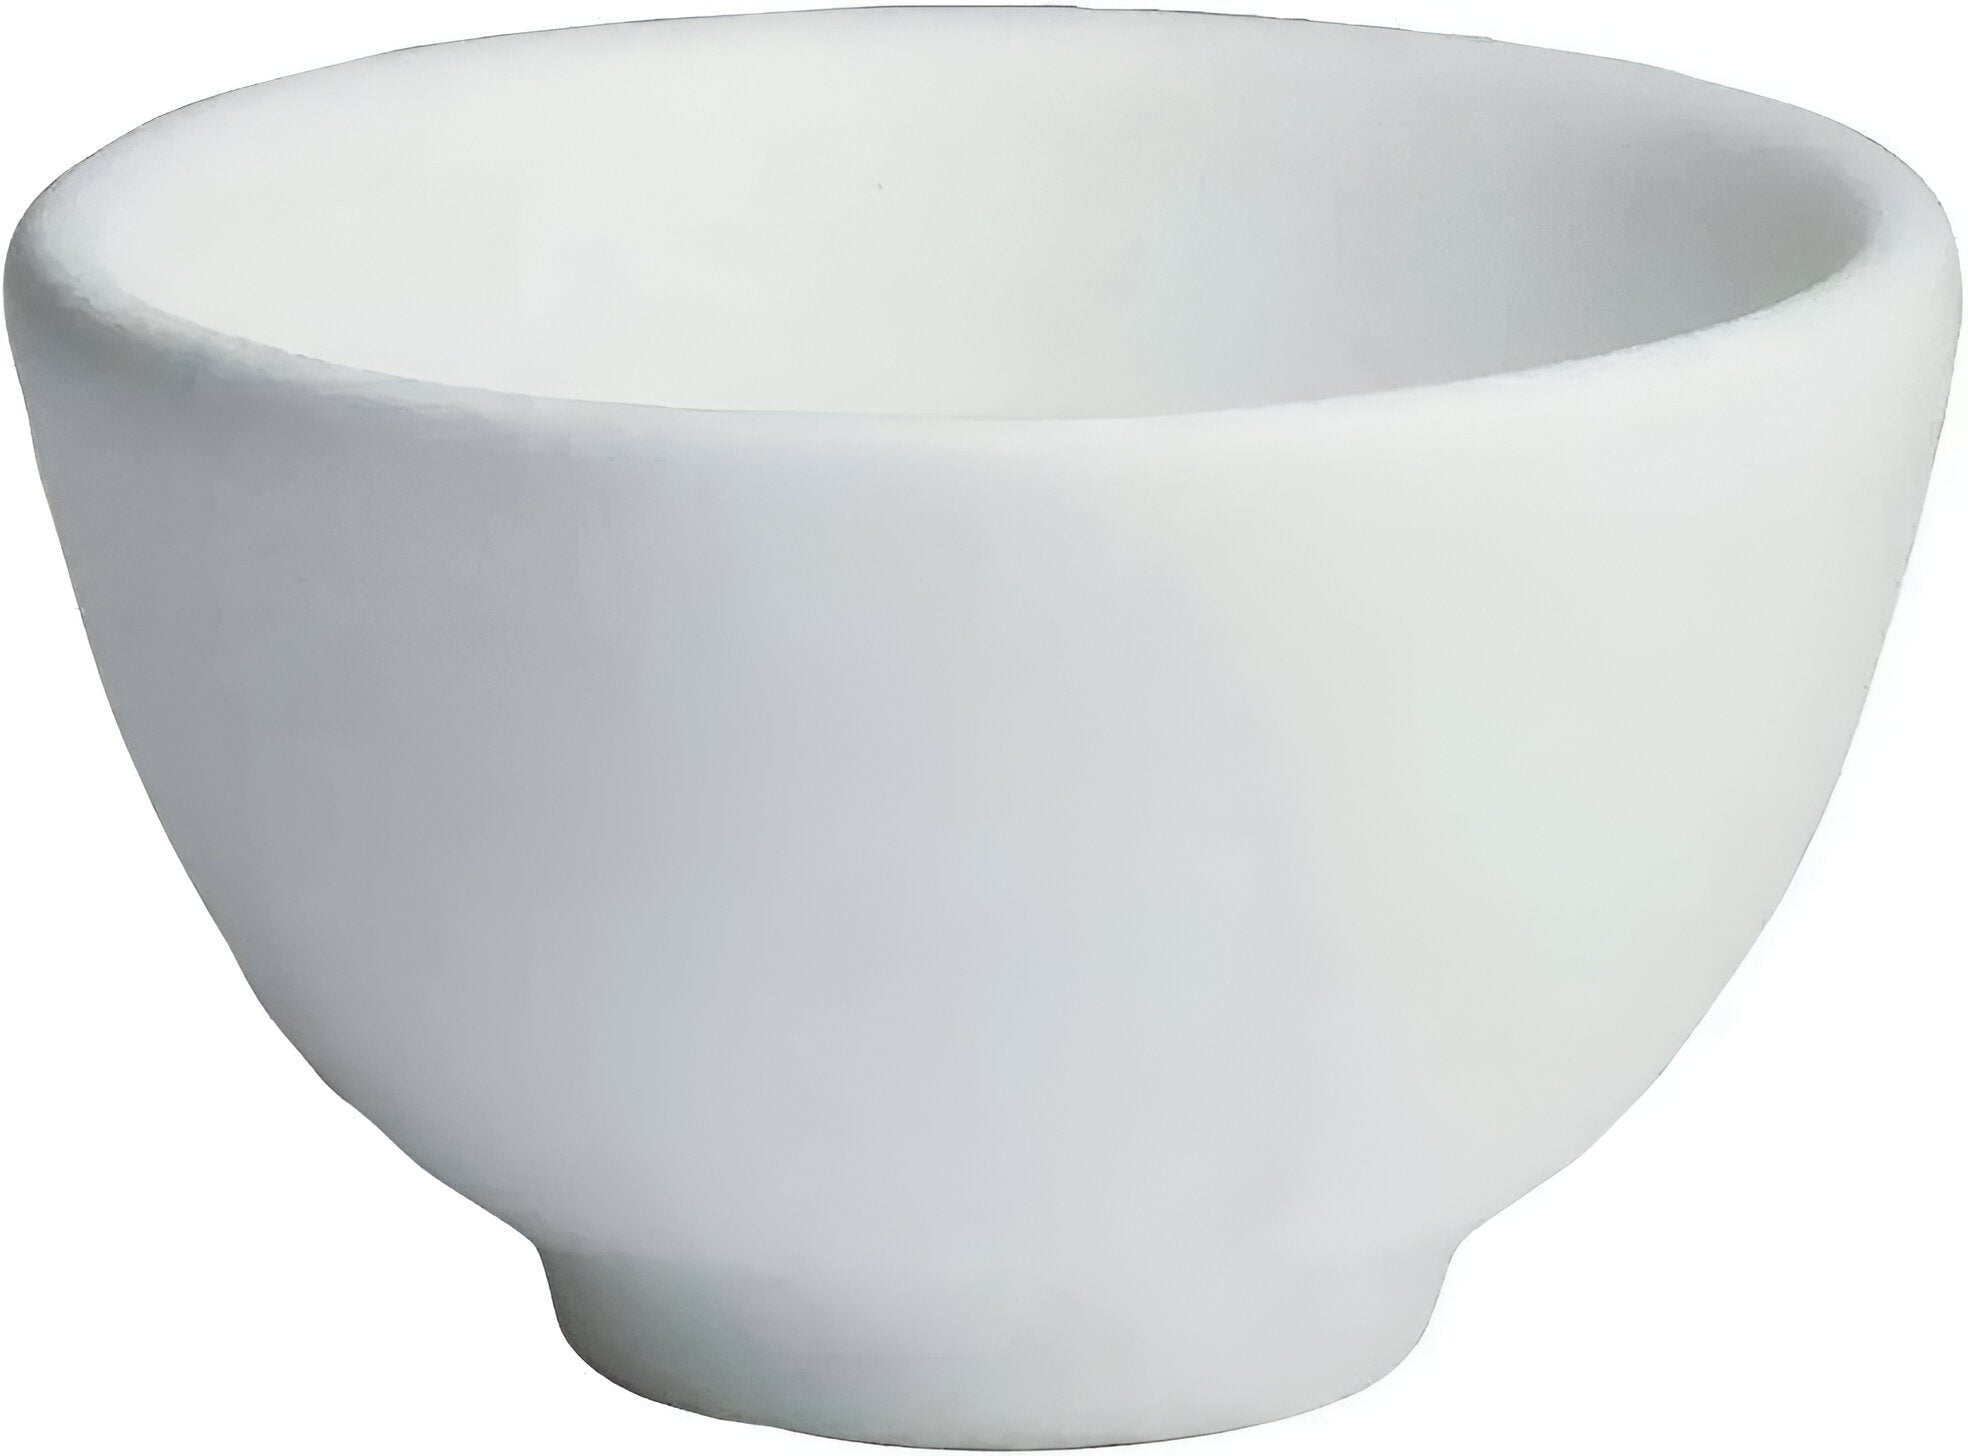 Bugambilia - Mod 8.45 Oz Medium White Round Rice Bowl With Glossy Smooth Finish - MAD06-MOD-WW